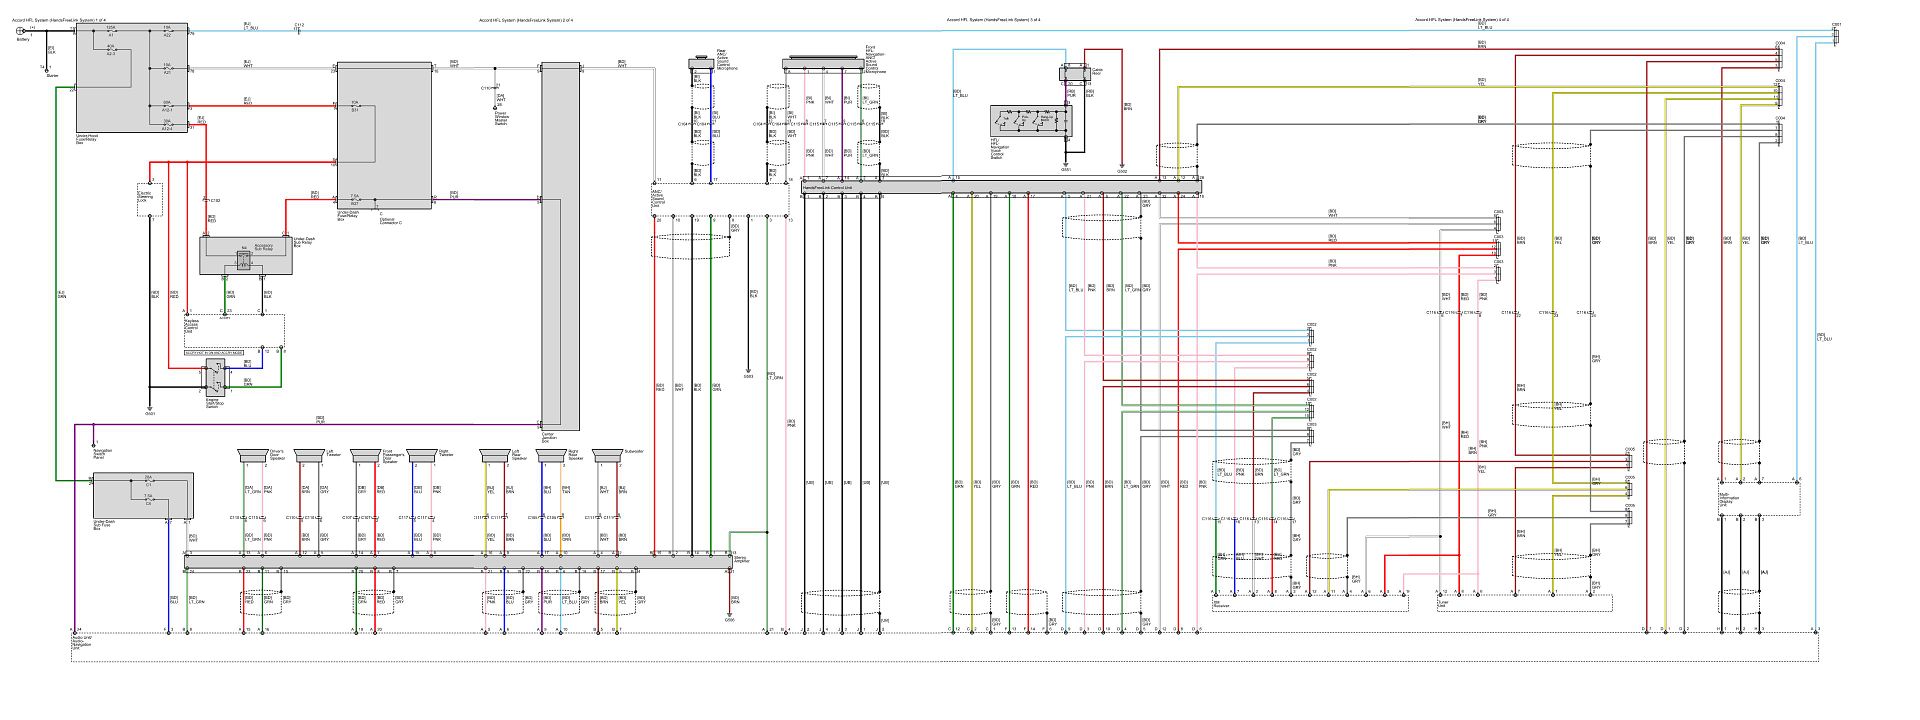 audison vcra wiring diagram